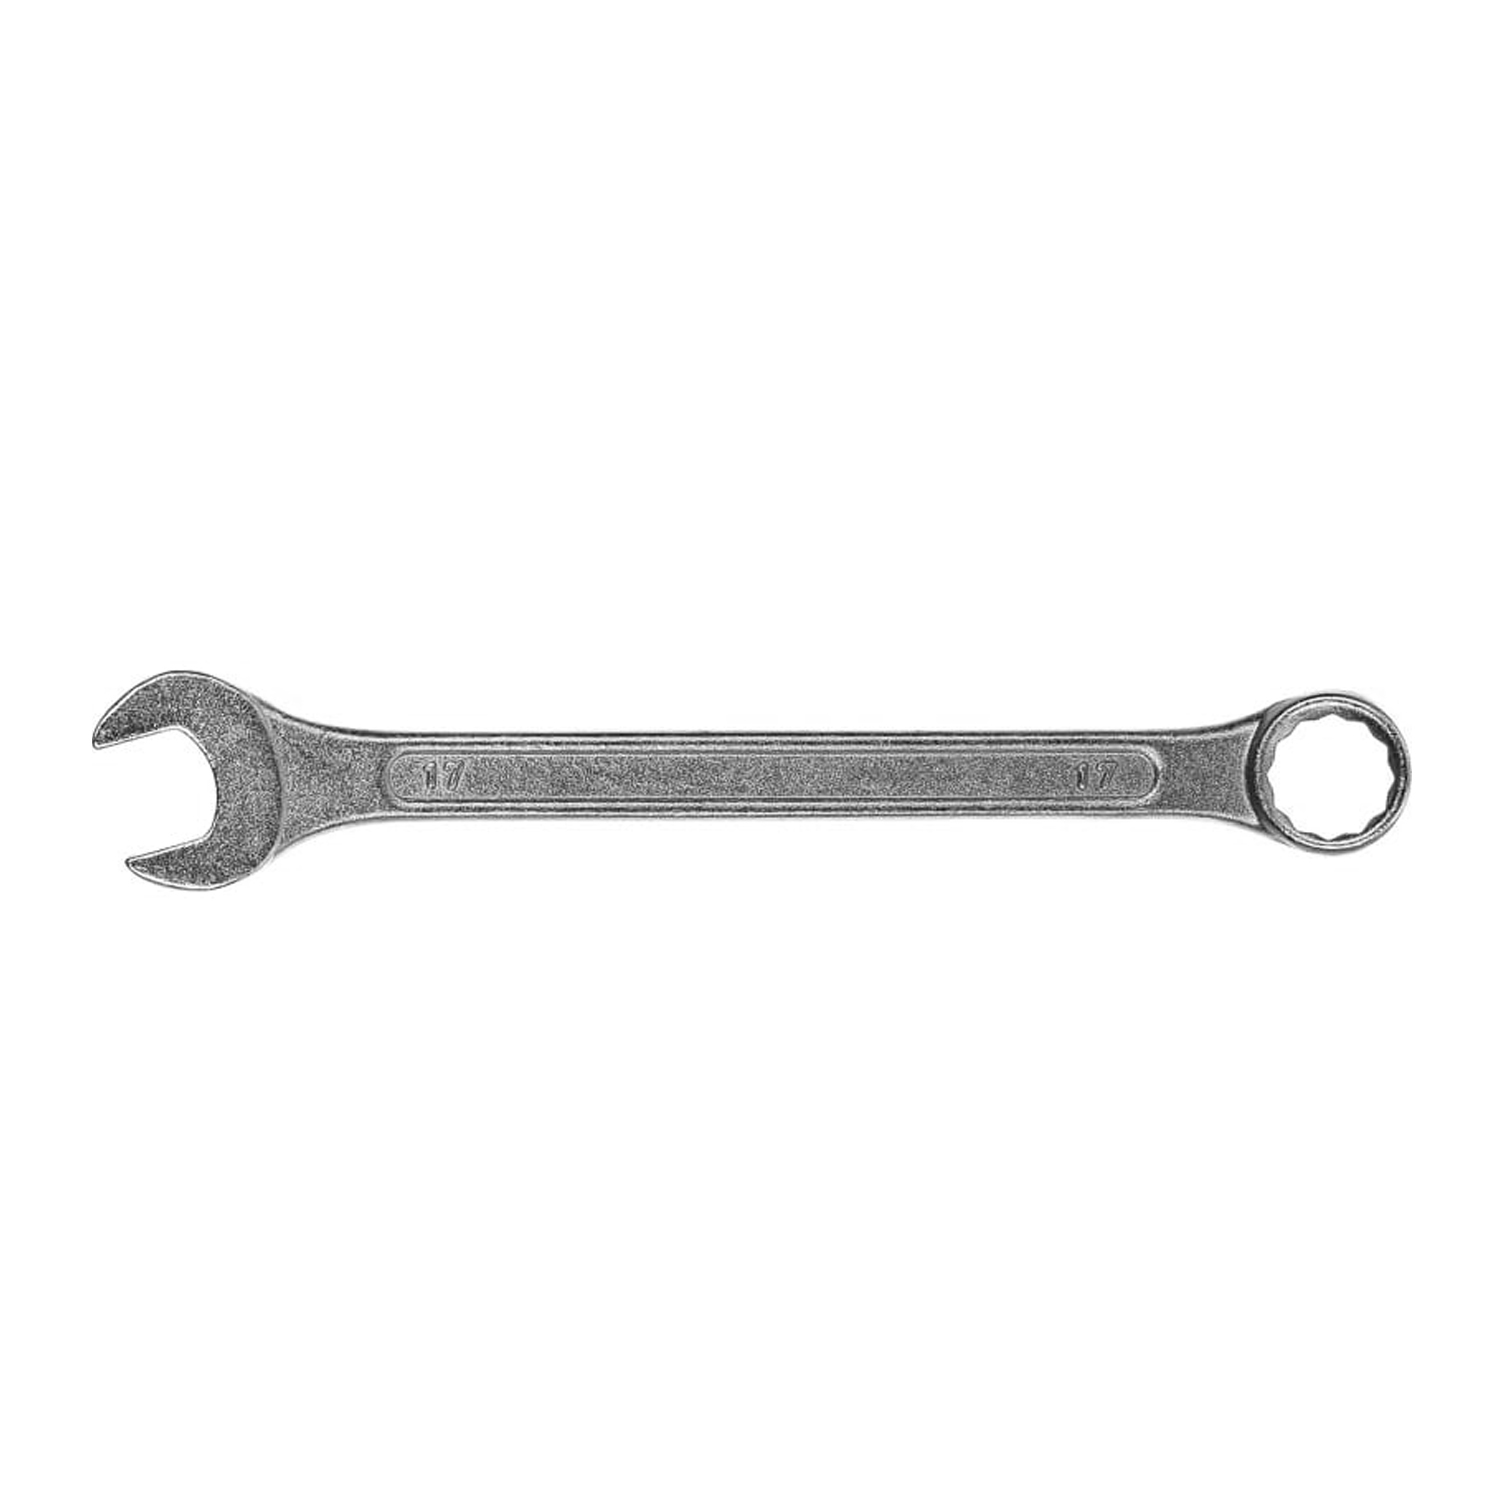 Ключ комбинированный 17 мм. Магнитный гаечный ключ, 17мм. Wrench,Grip,Gedore,6406620,1in,185mm. Ключ гаечный комбинированный плоский 17х17 искробезопасный. Ключ комбинированный 17 длинный-длинный.